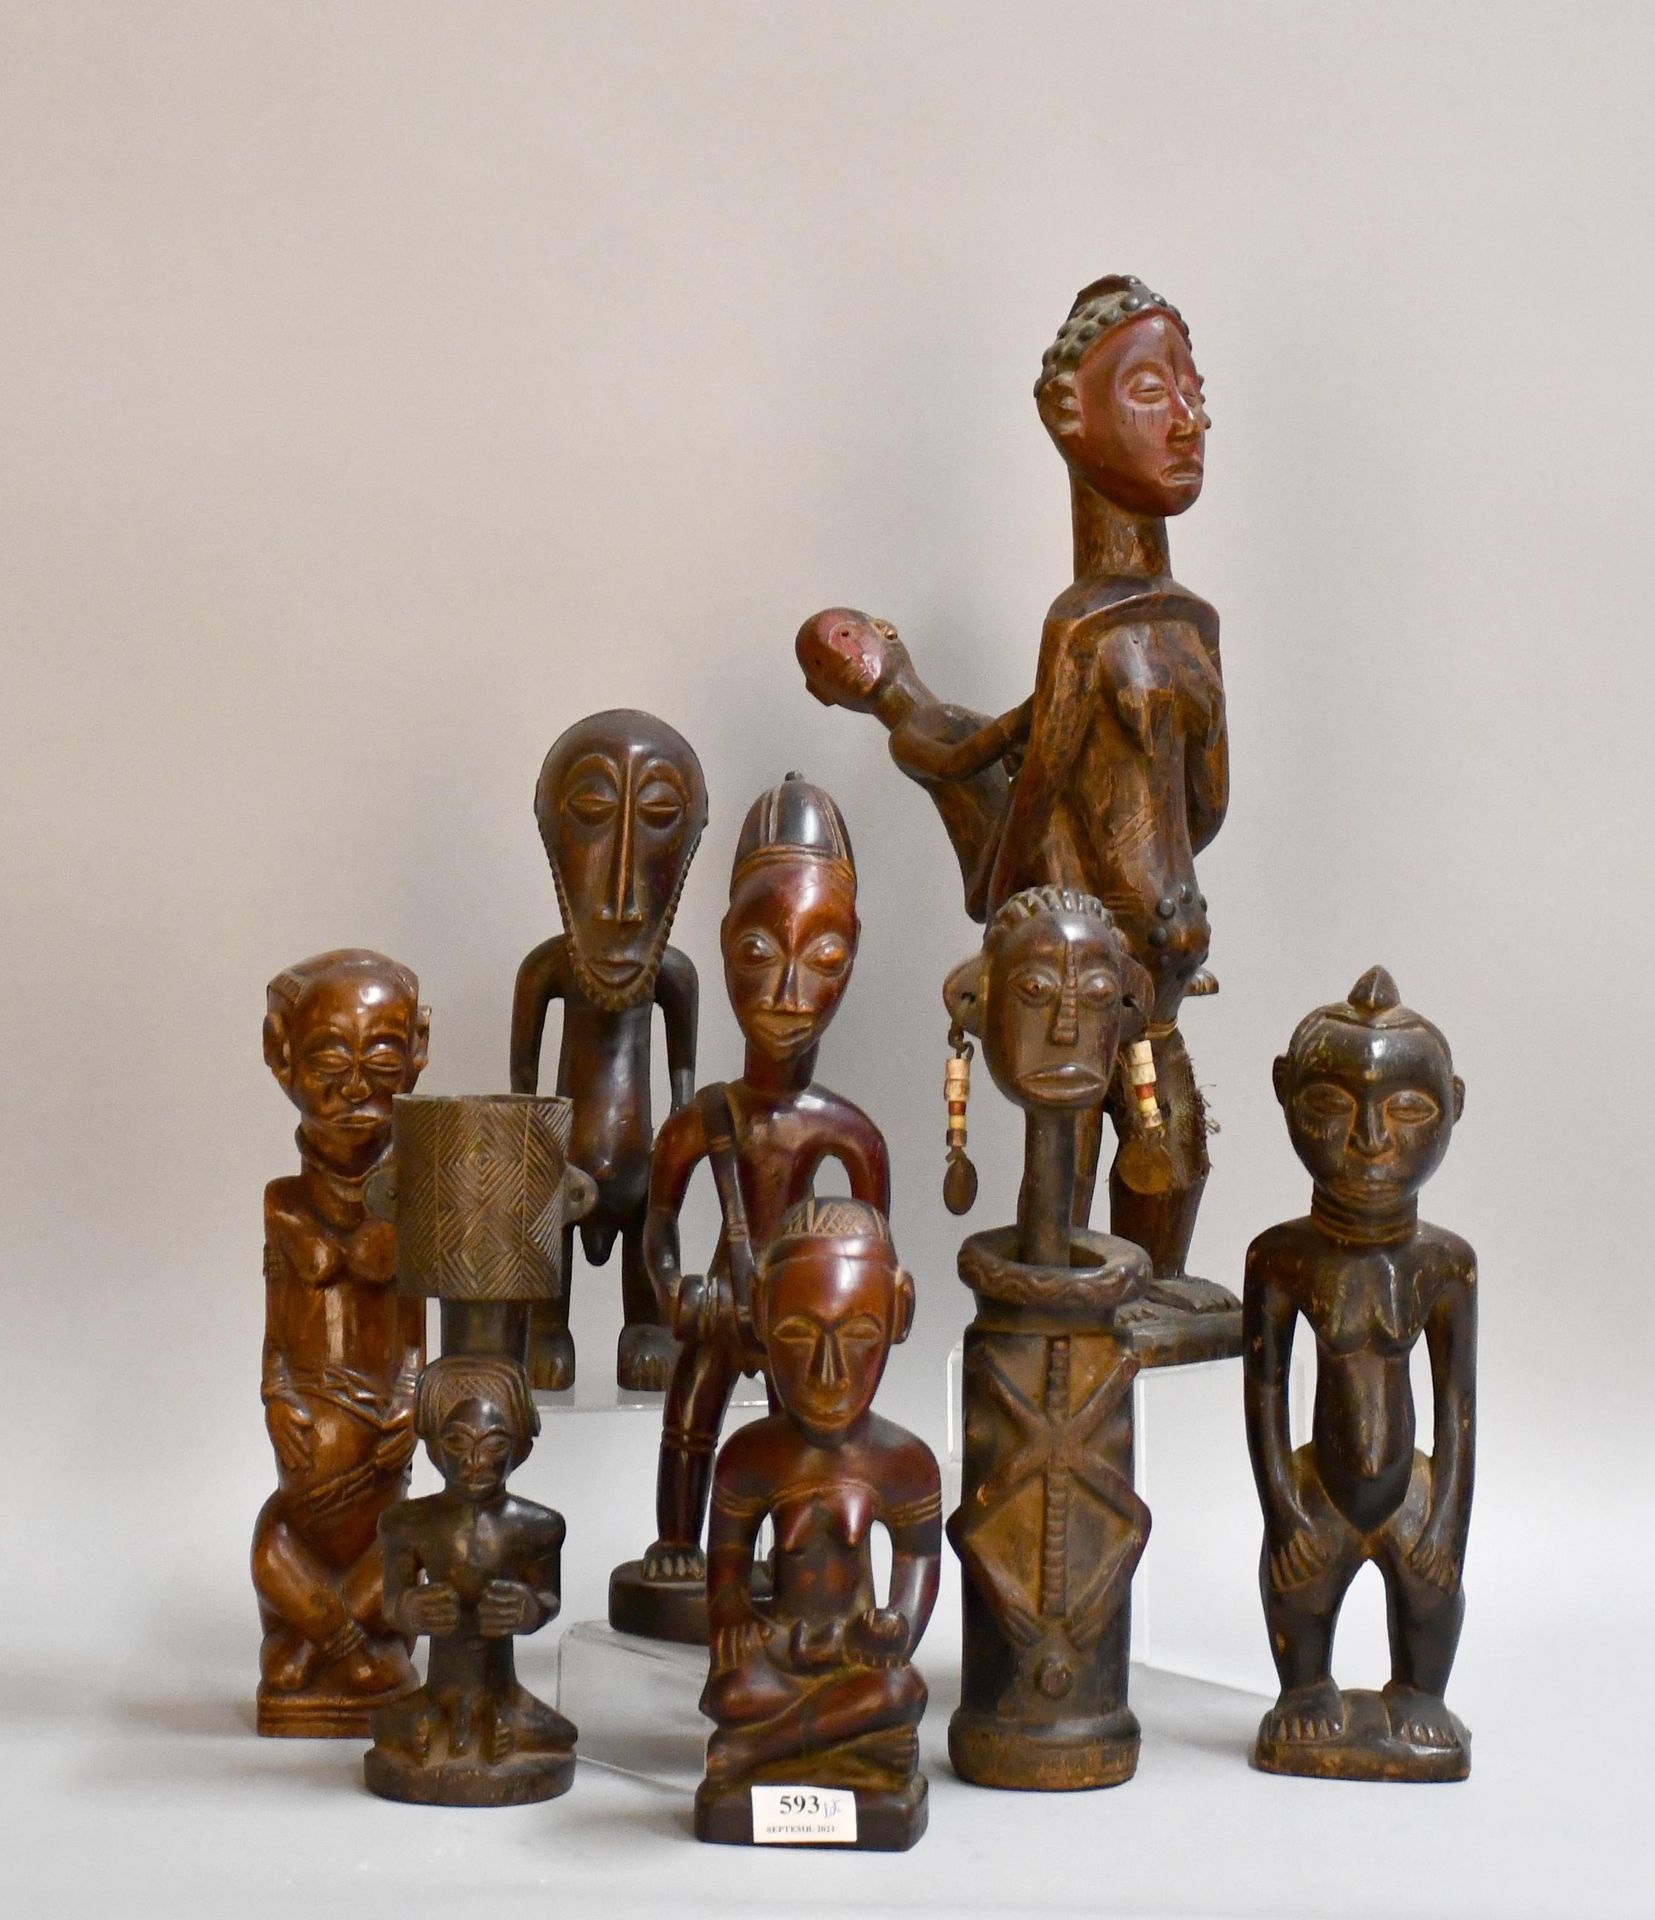 Null Africana

Lote de fetiches africanos en madera tallada.